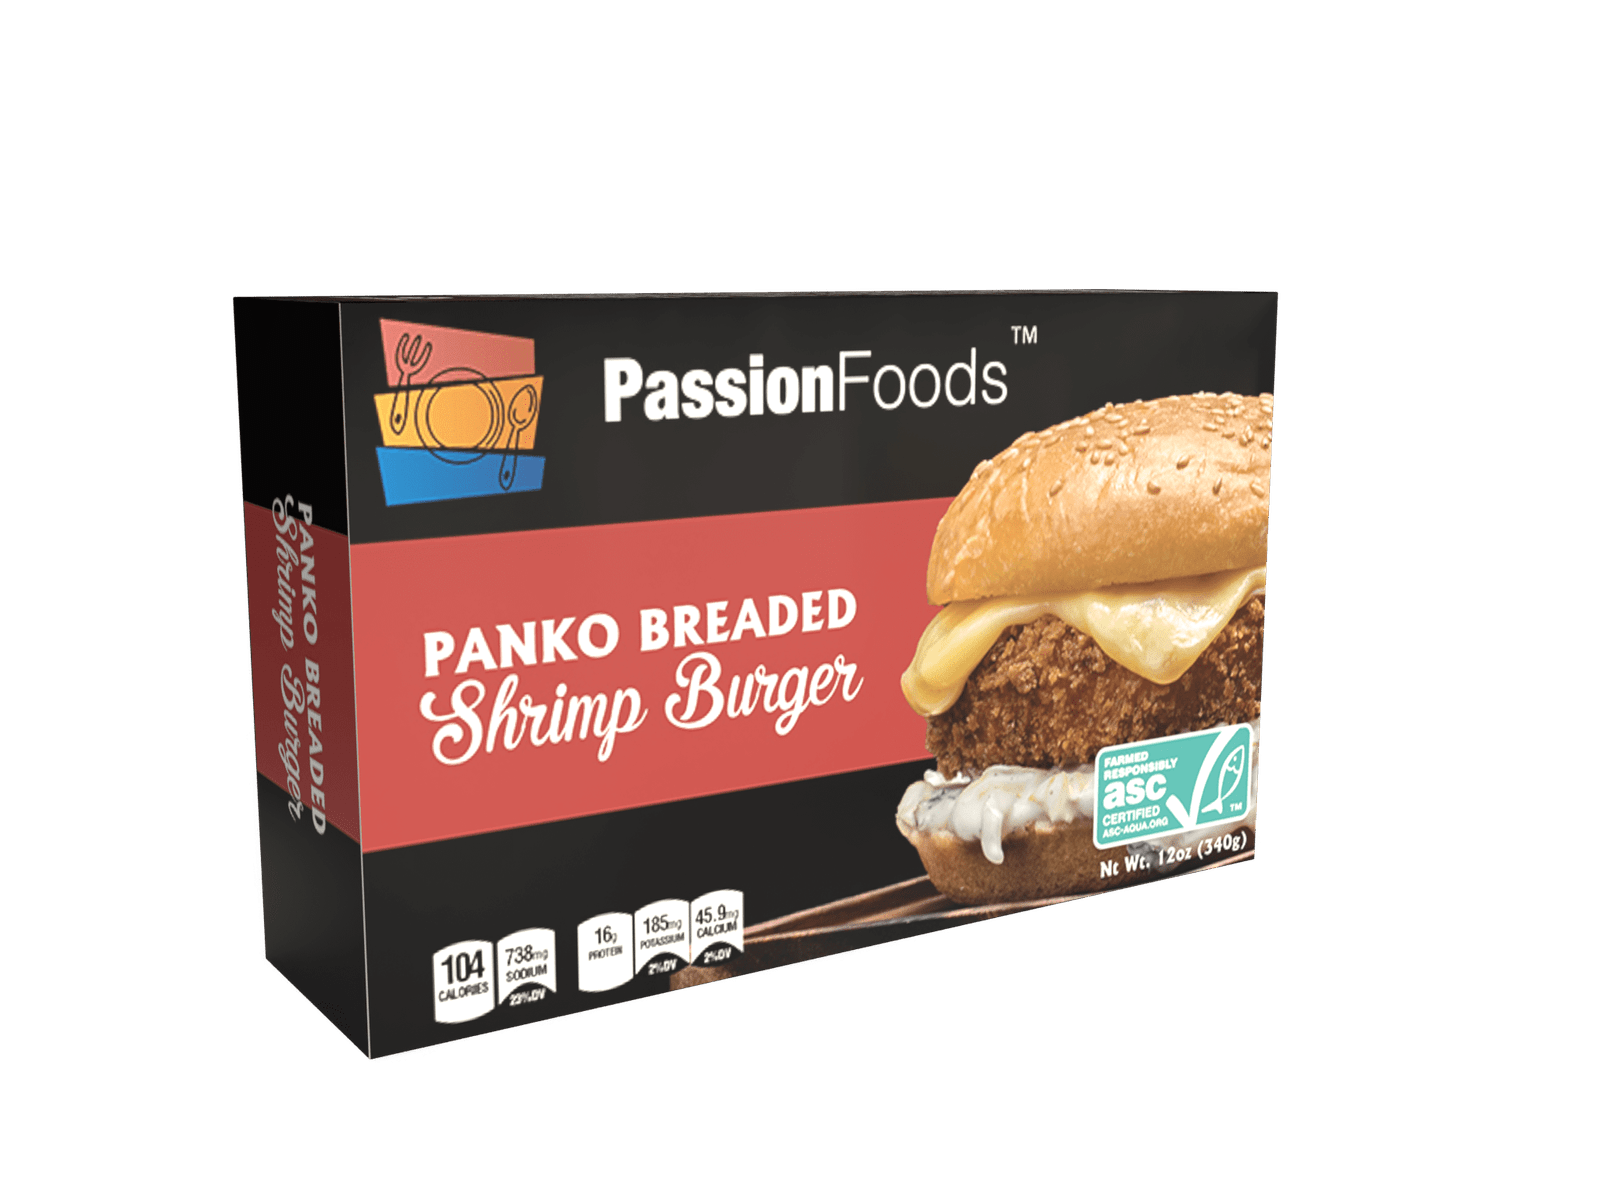 Shrimp Burger Panko Breaded